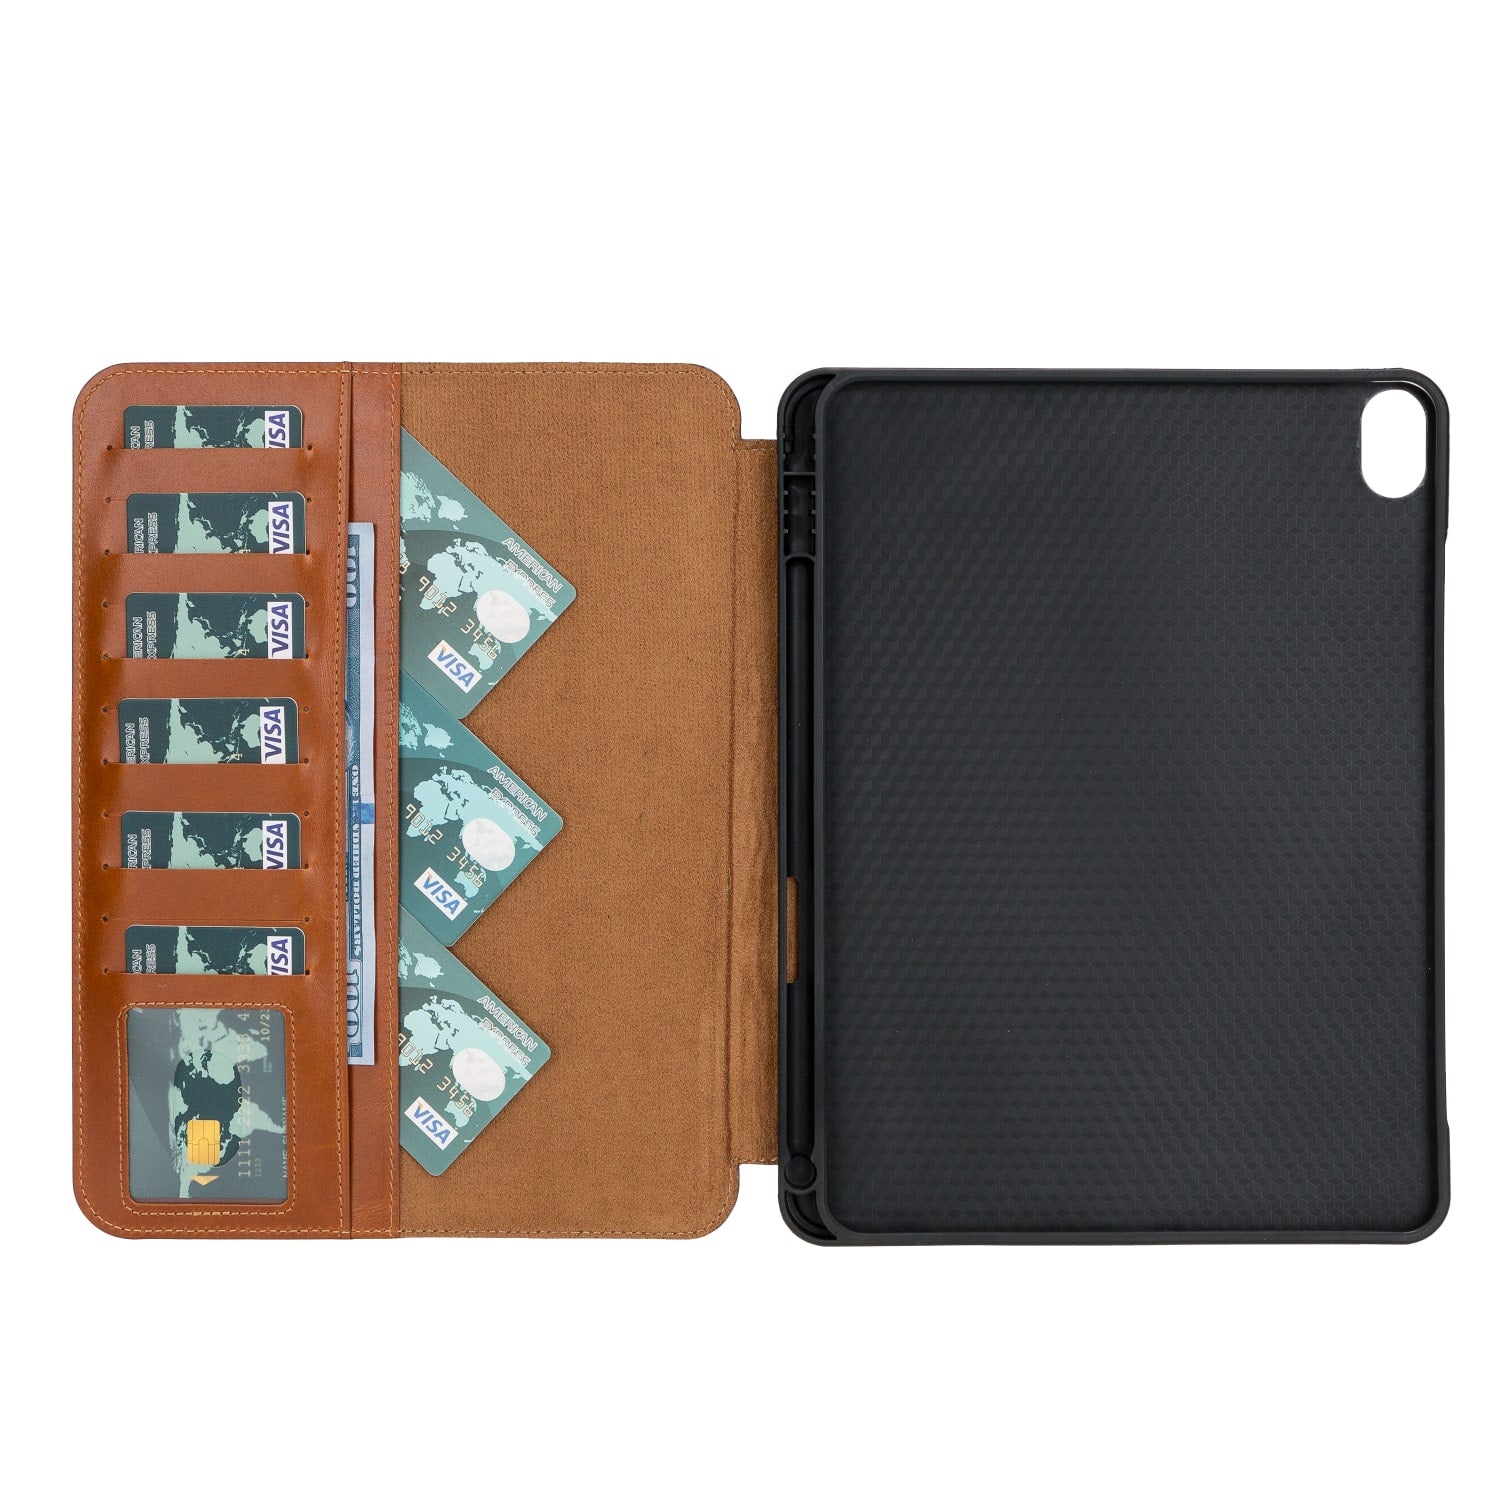 Brown Leather iPad Air 10.9 Inc Smart Folio Case with Apple Pen Holder - Bomonti - 2